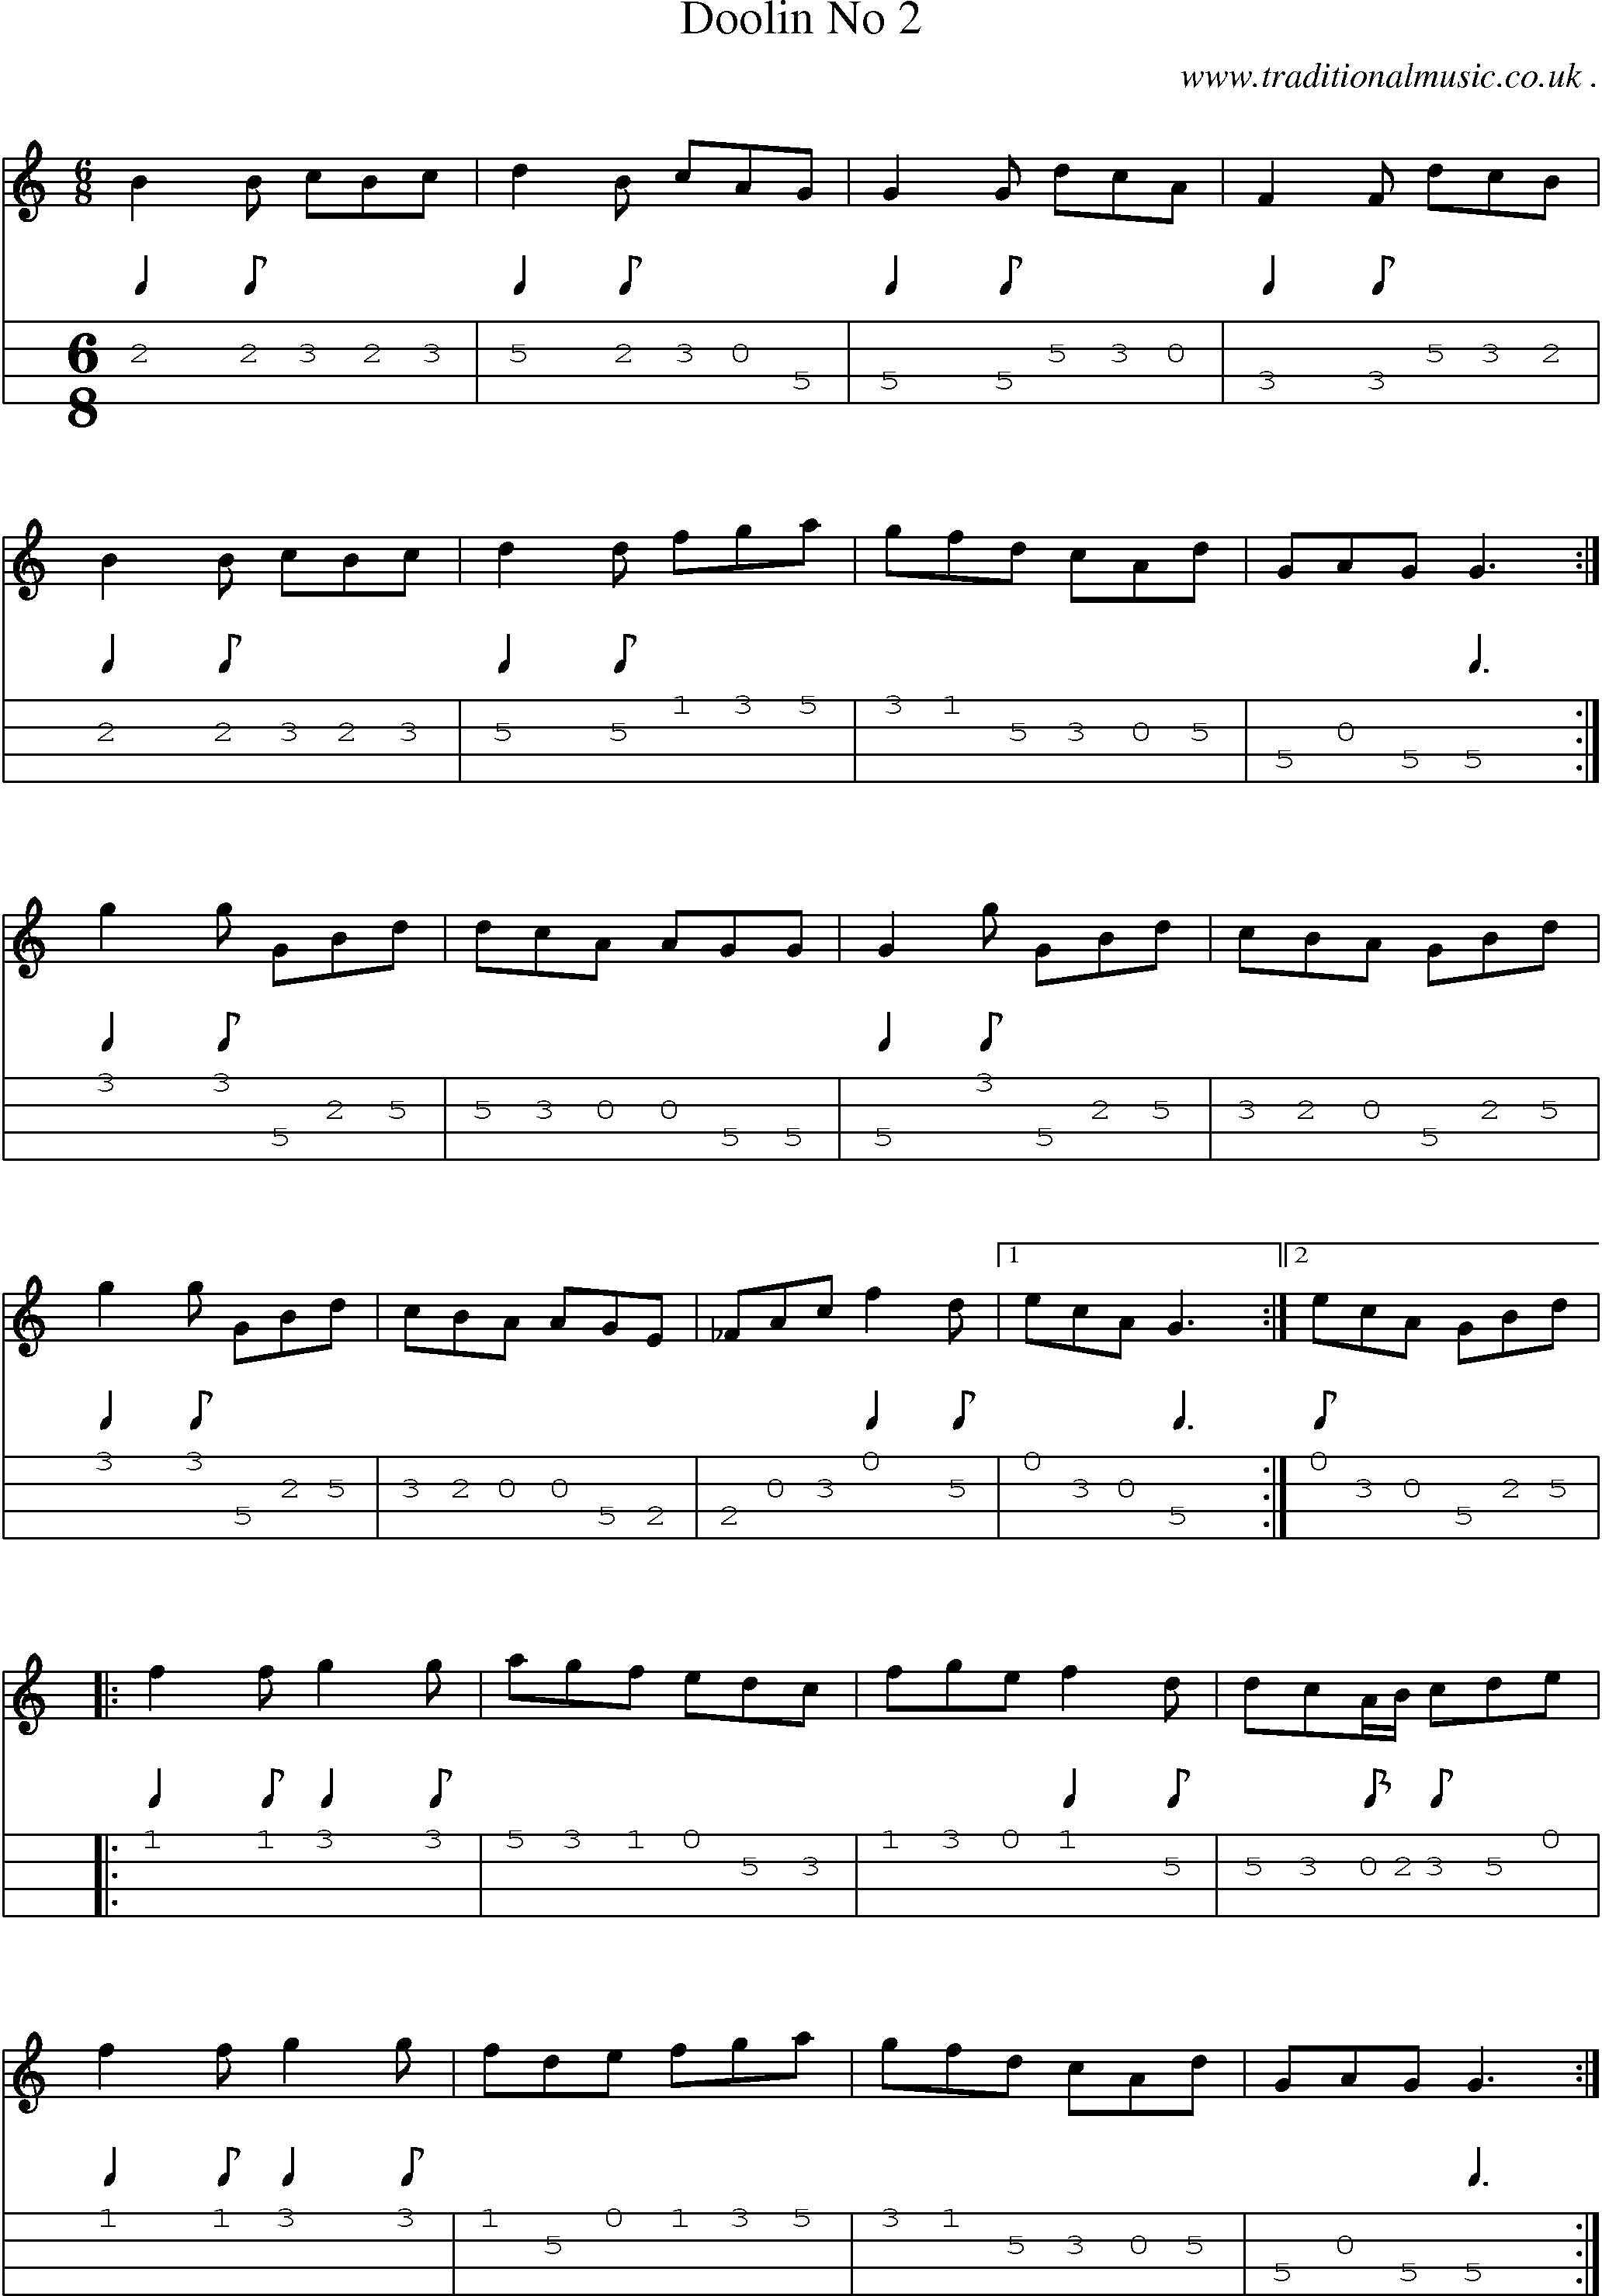 Sheet-Music and Mandolin Tabs for Doolin No 2